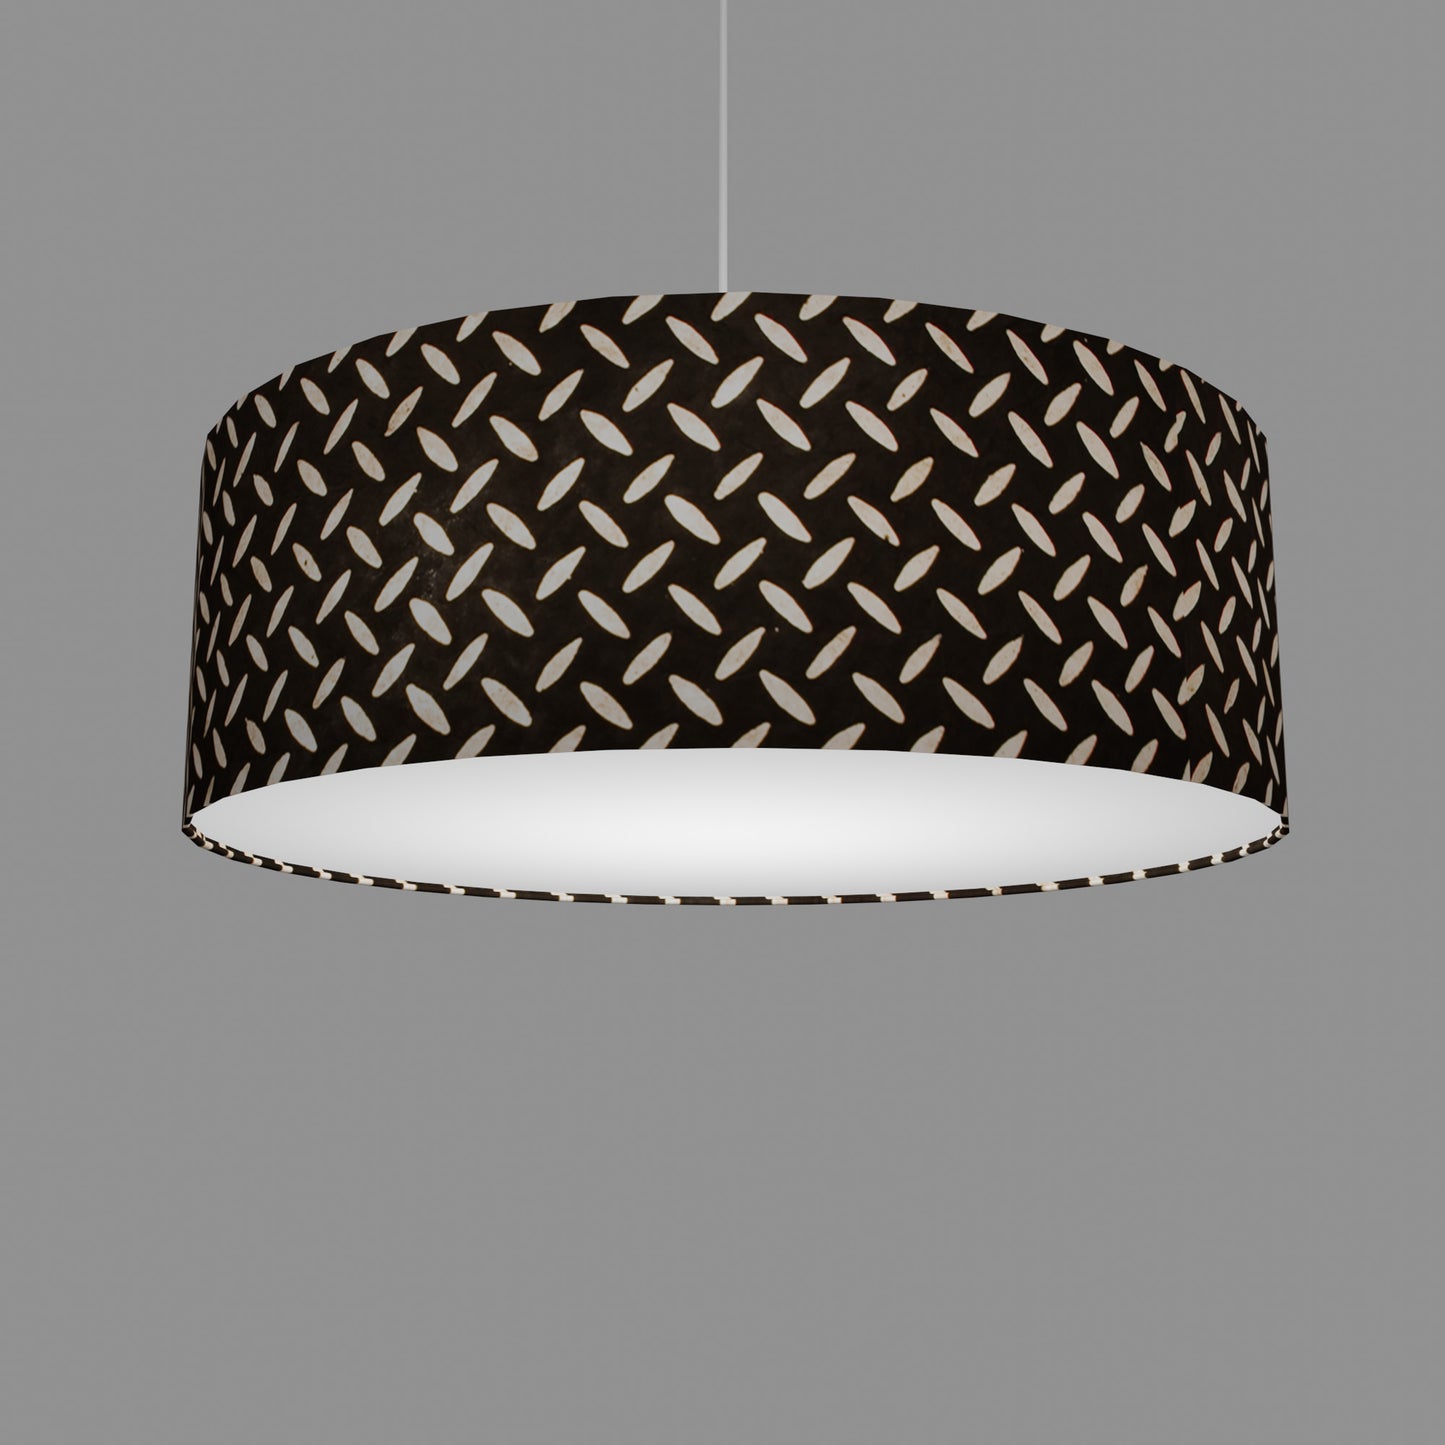 Drum Lamp Shade - P11 - Batik Tread Plate Black, 60cm(d) x 20cm(h)